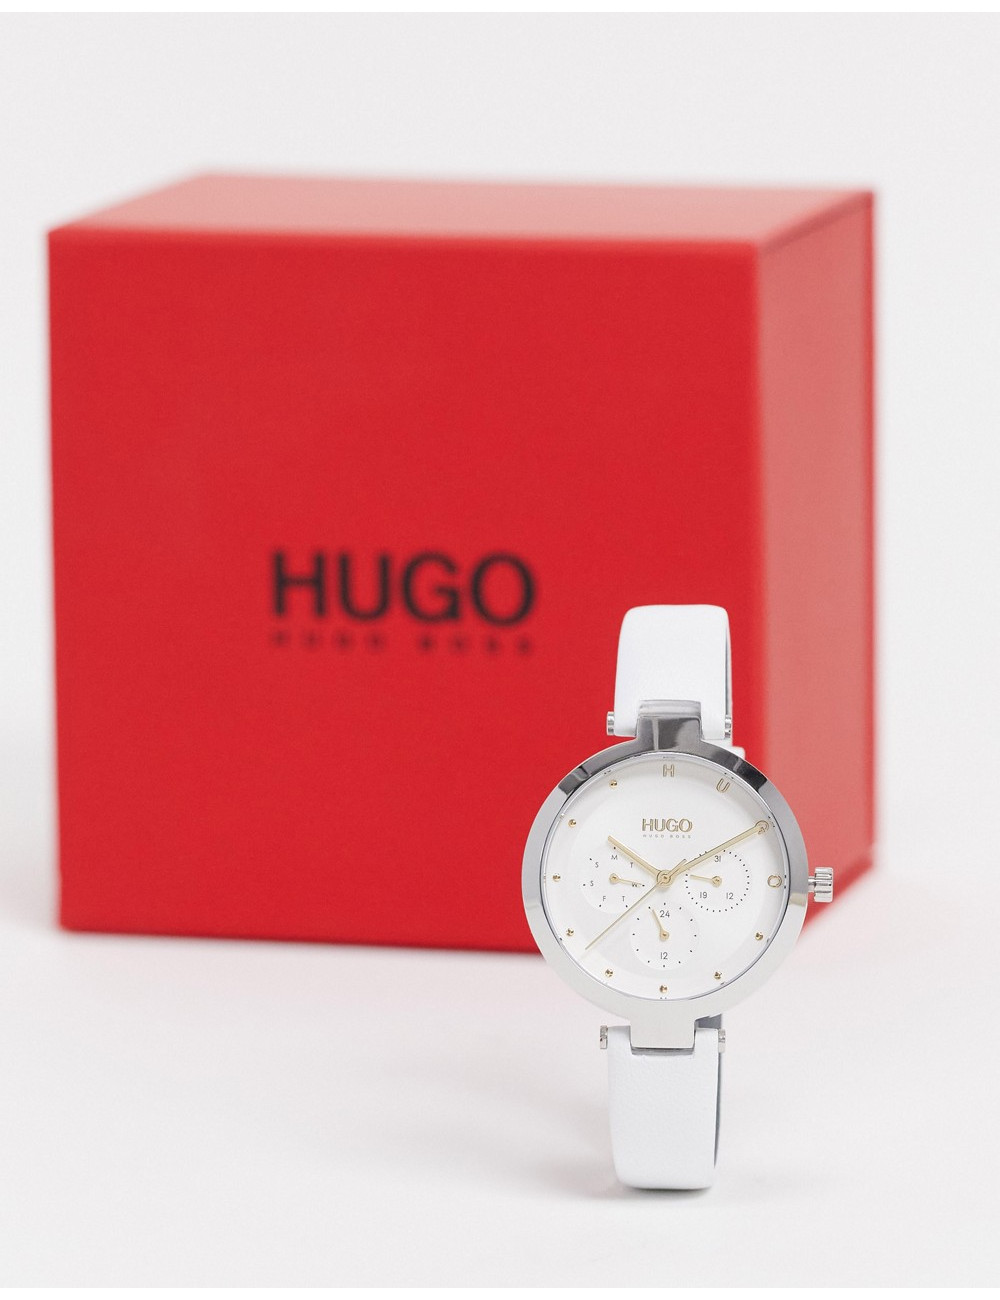 Hugo womens leather watch...